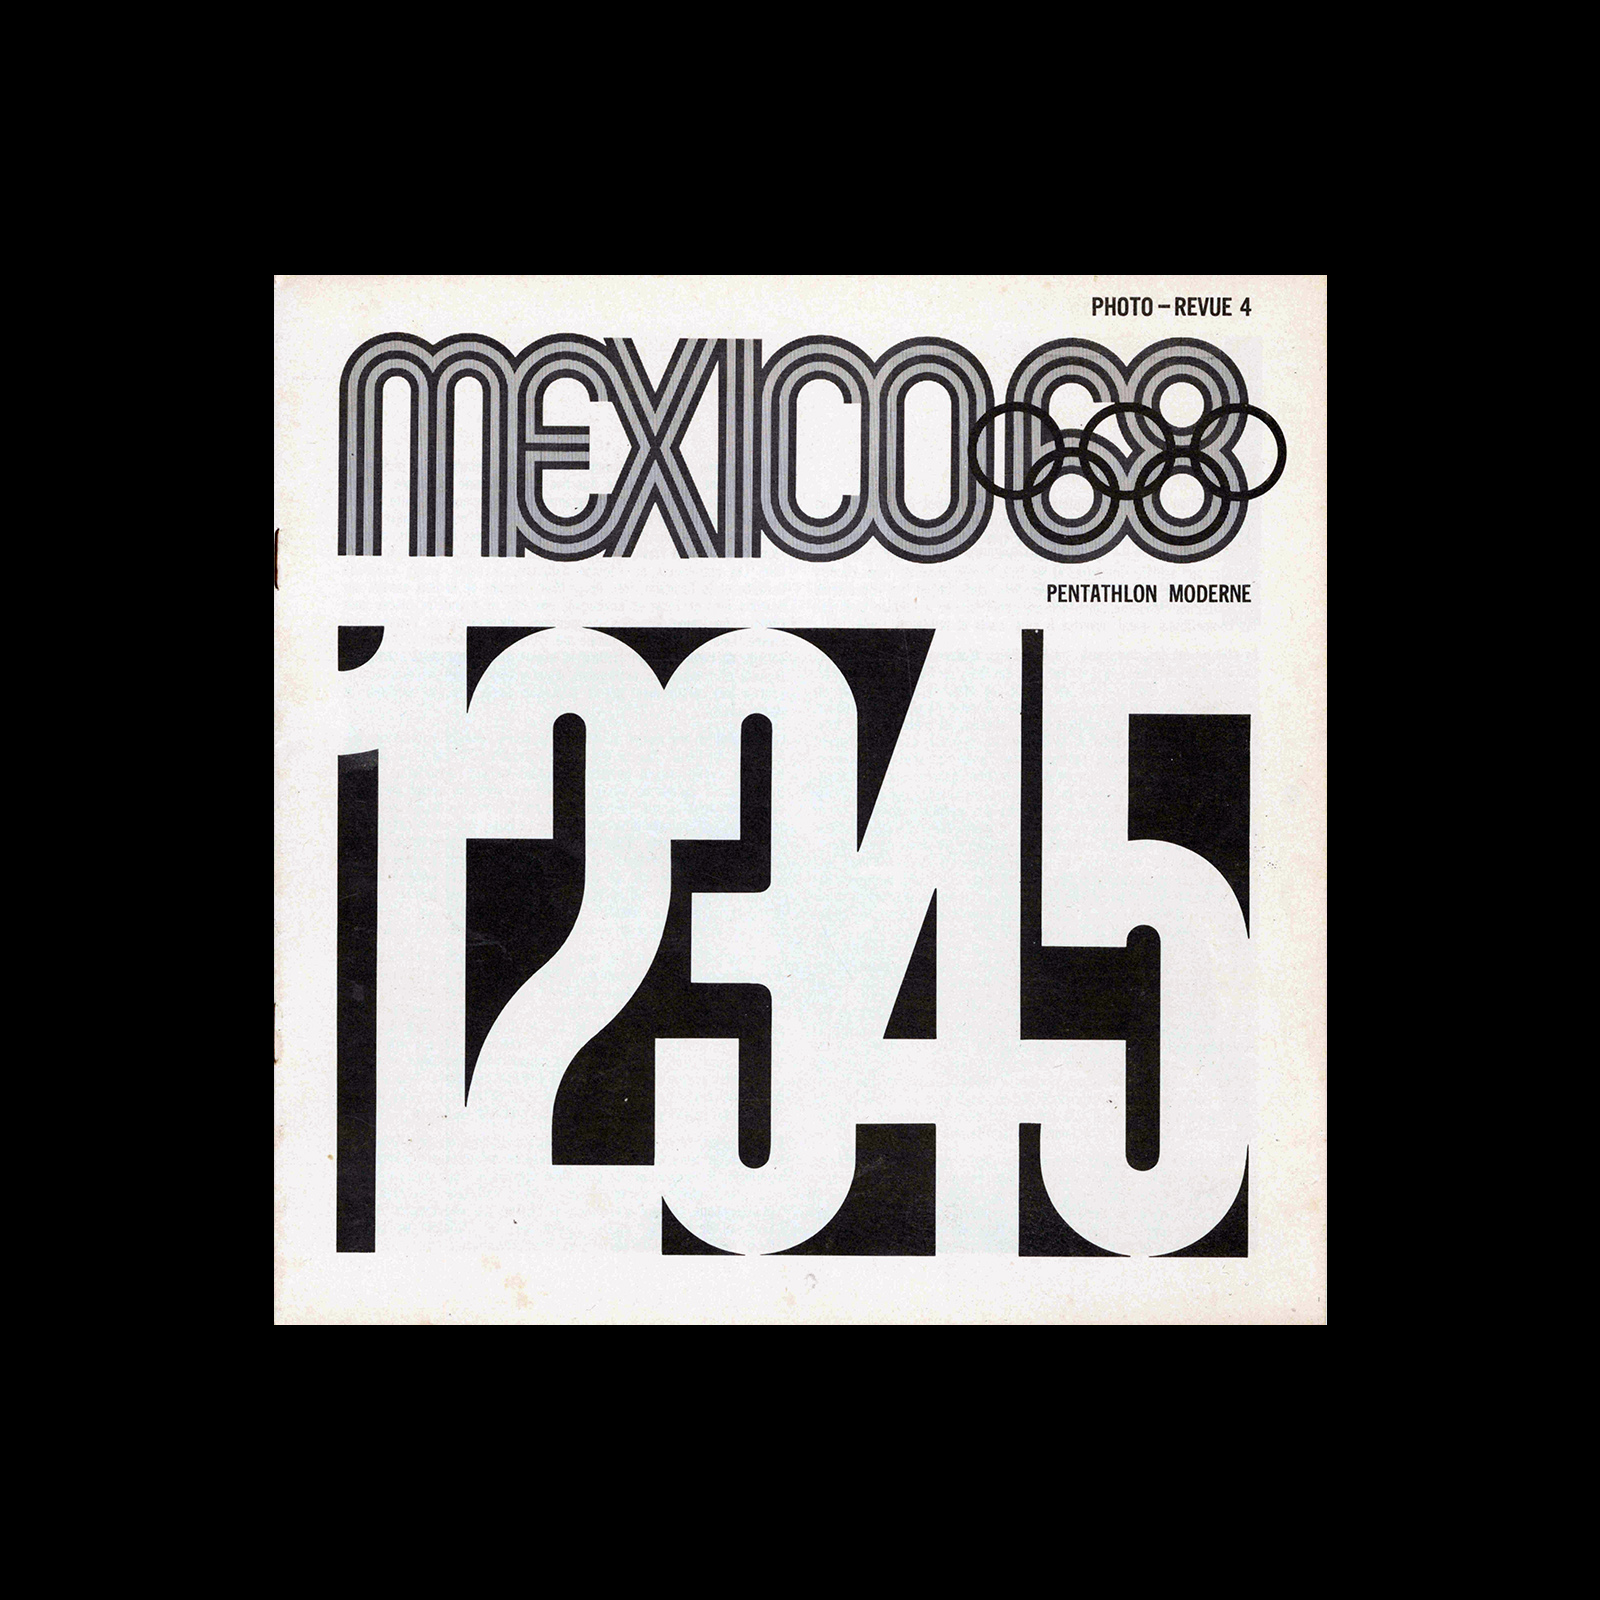 Mexico 1968, Photo - Revue 4, 1968. Designed by Lance Wyman